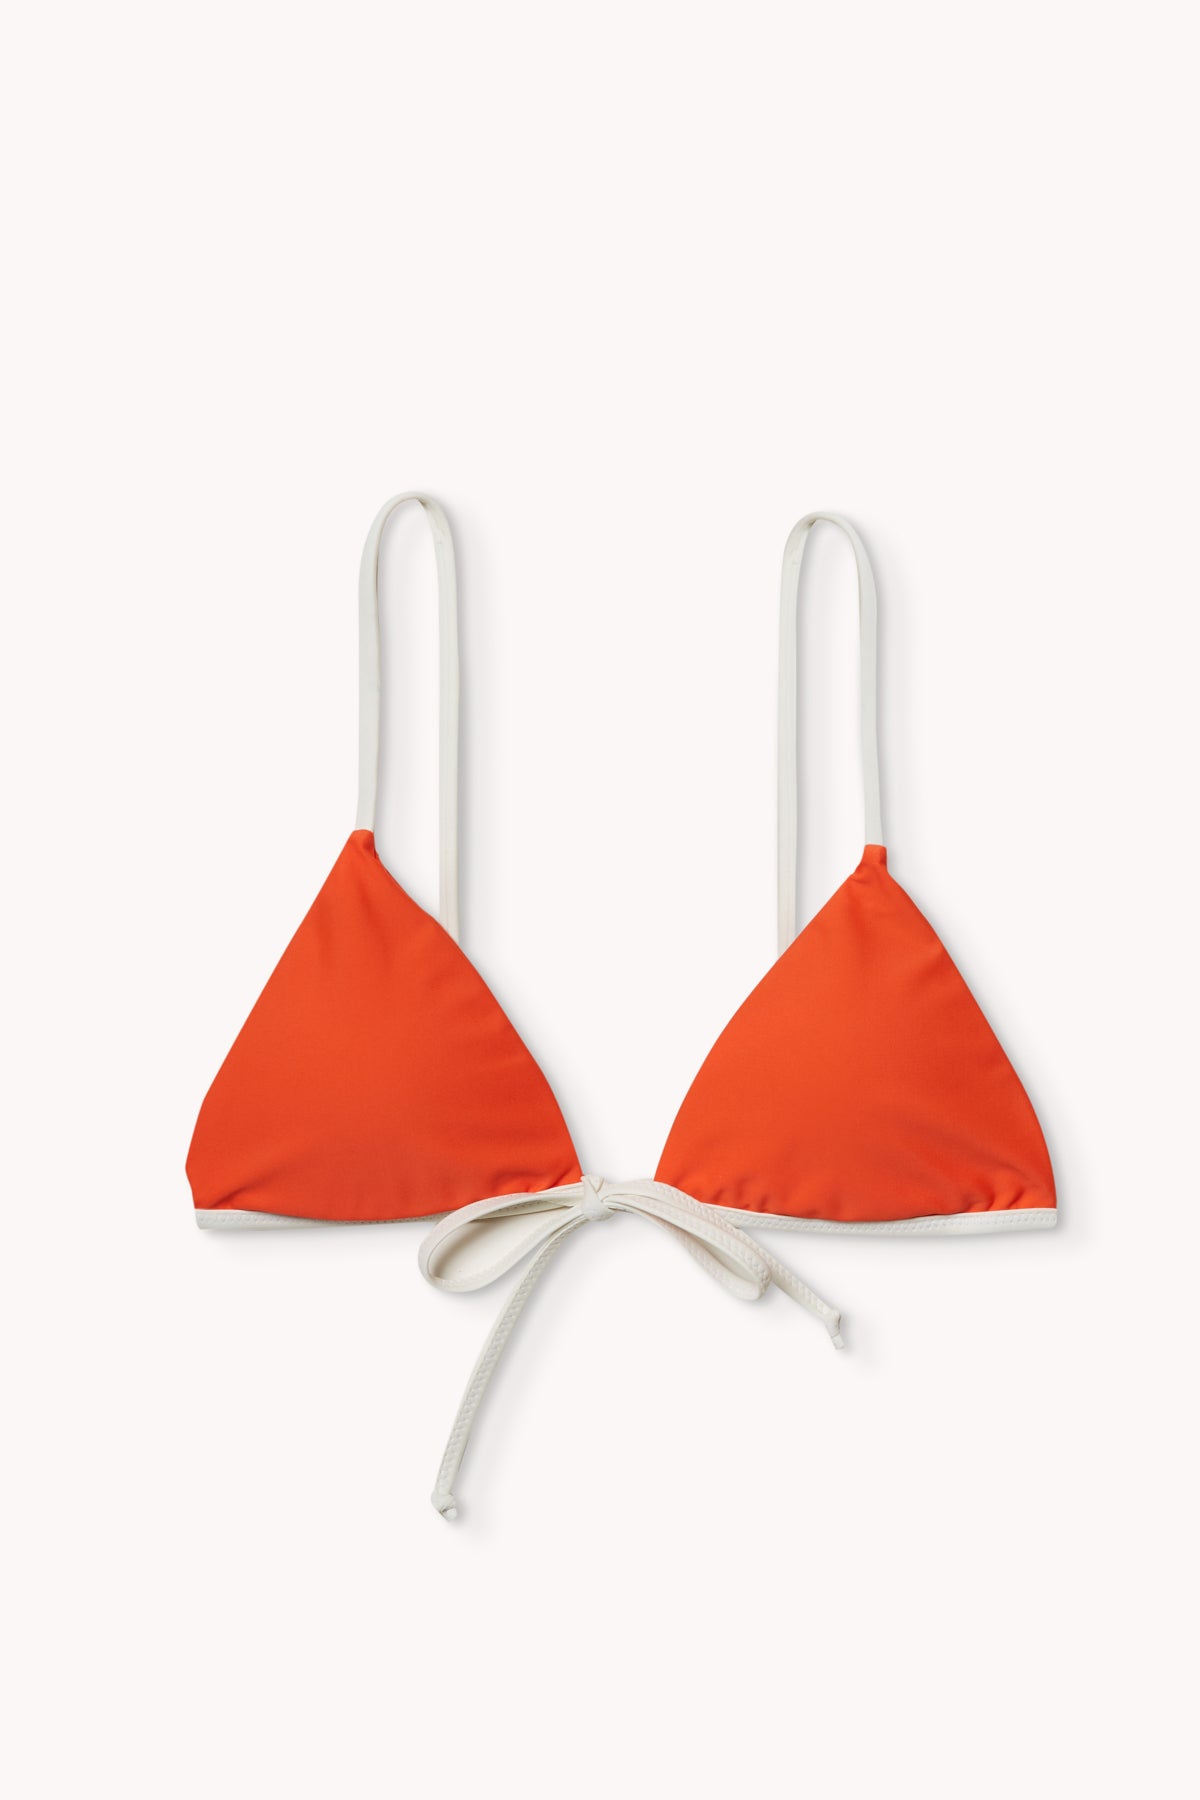 E-comm of the Santos Bikini top  in tangerine, by Ookioh